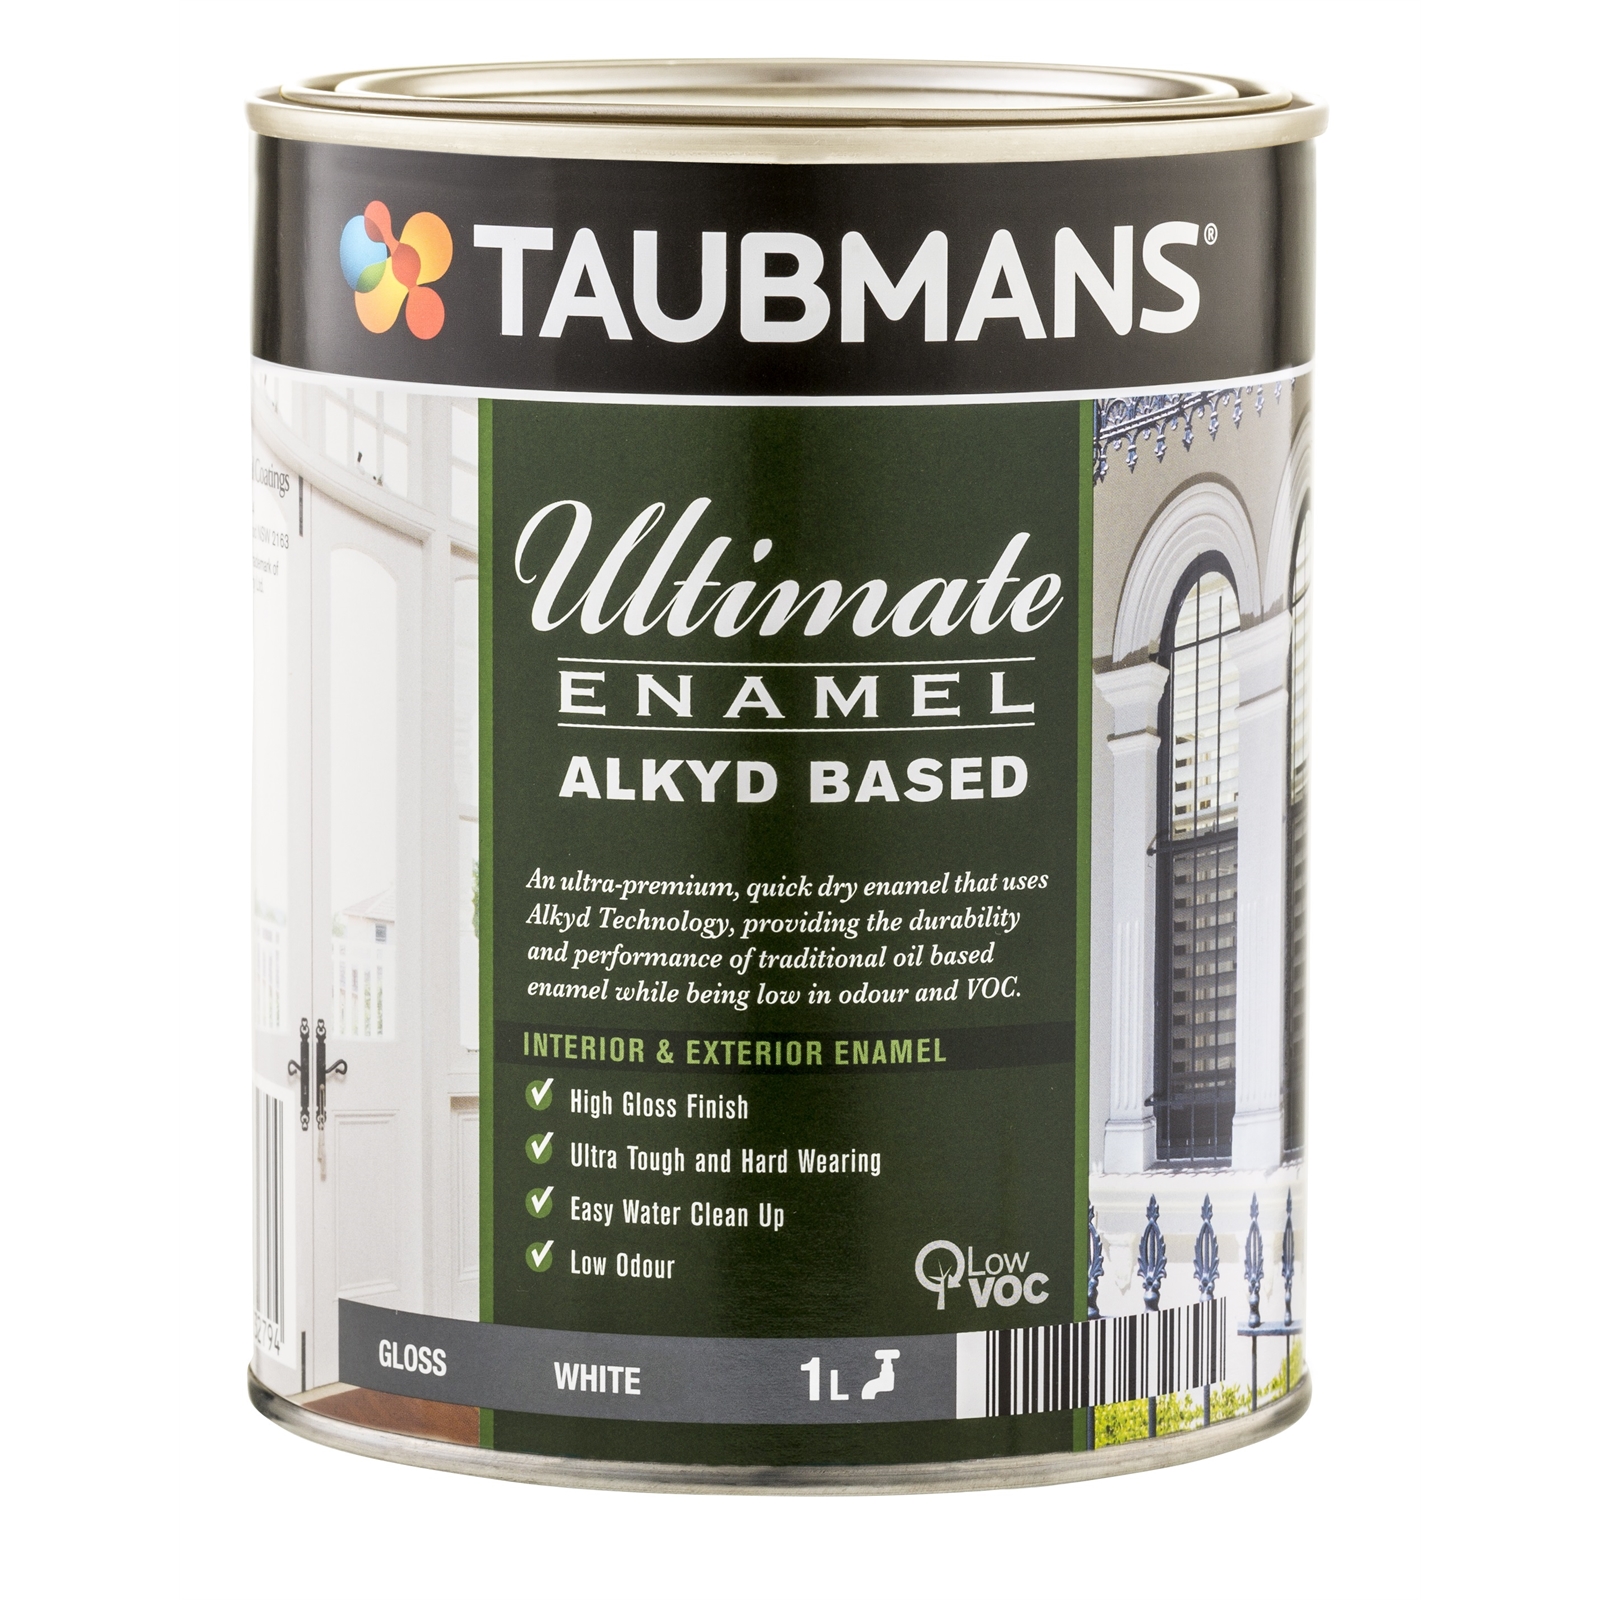 Taubmans Ultimate Enamel 1L White Gloss Alkyd Based Enamel